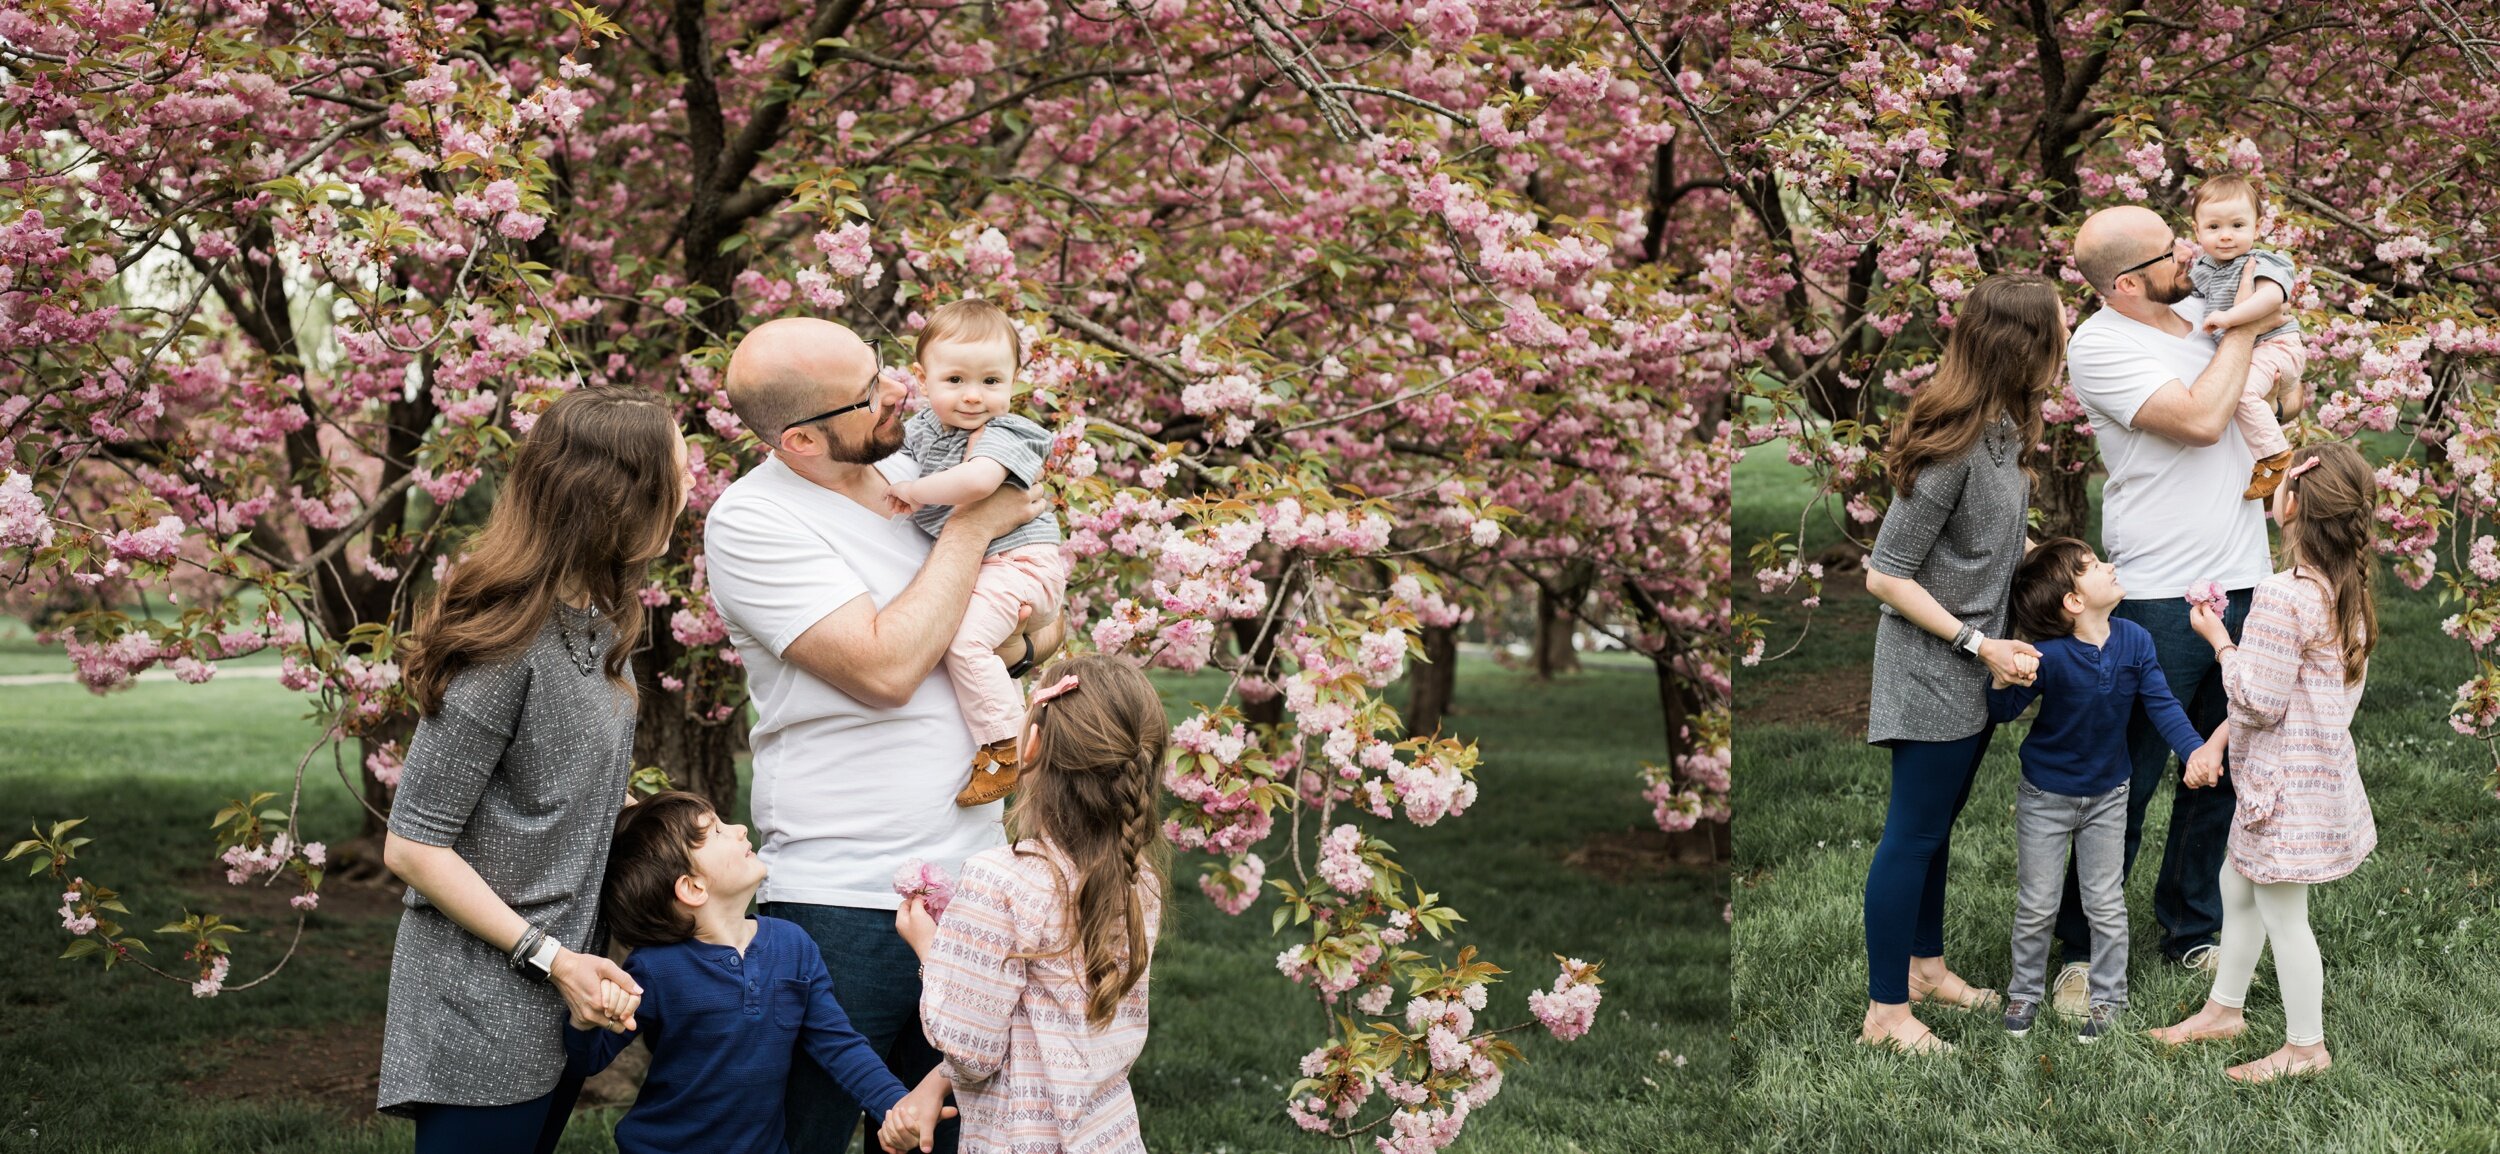 Spring Family Photos at Loose Park in Kansas City - 5